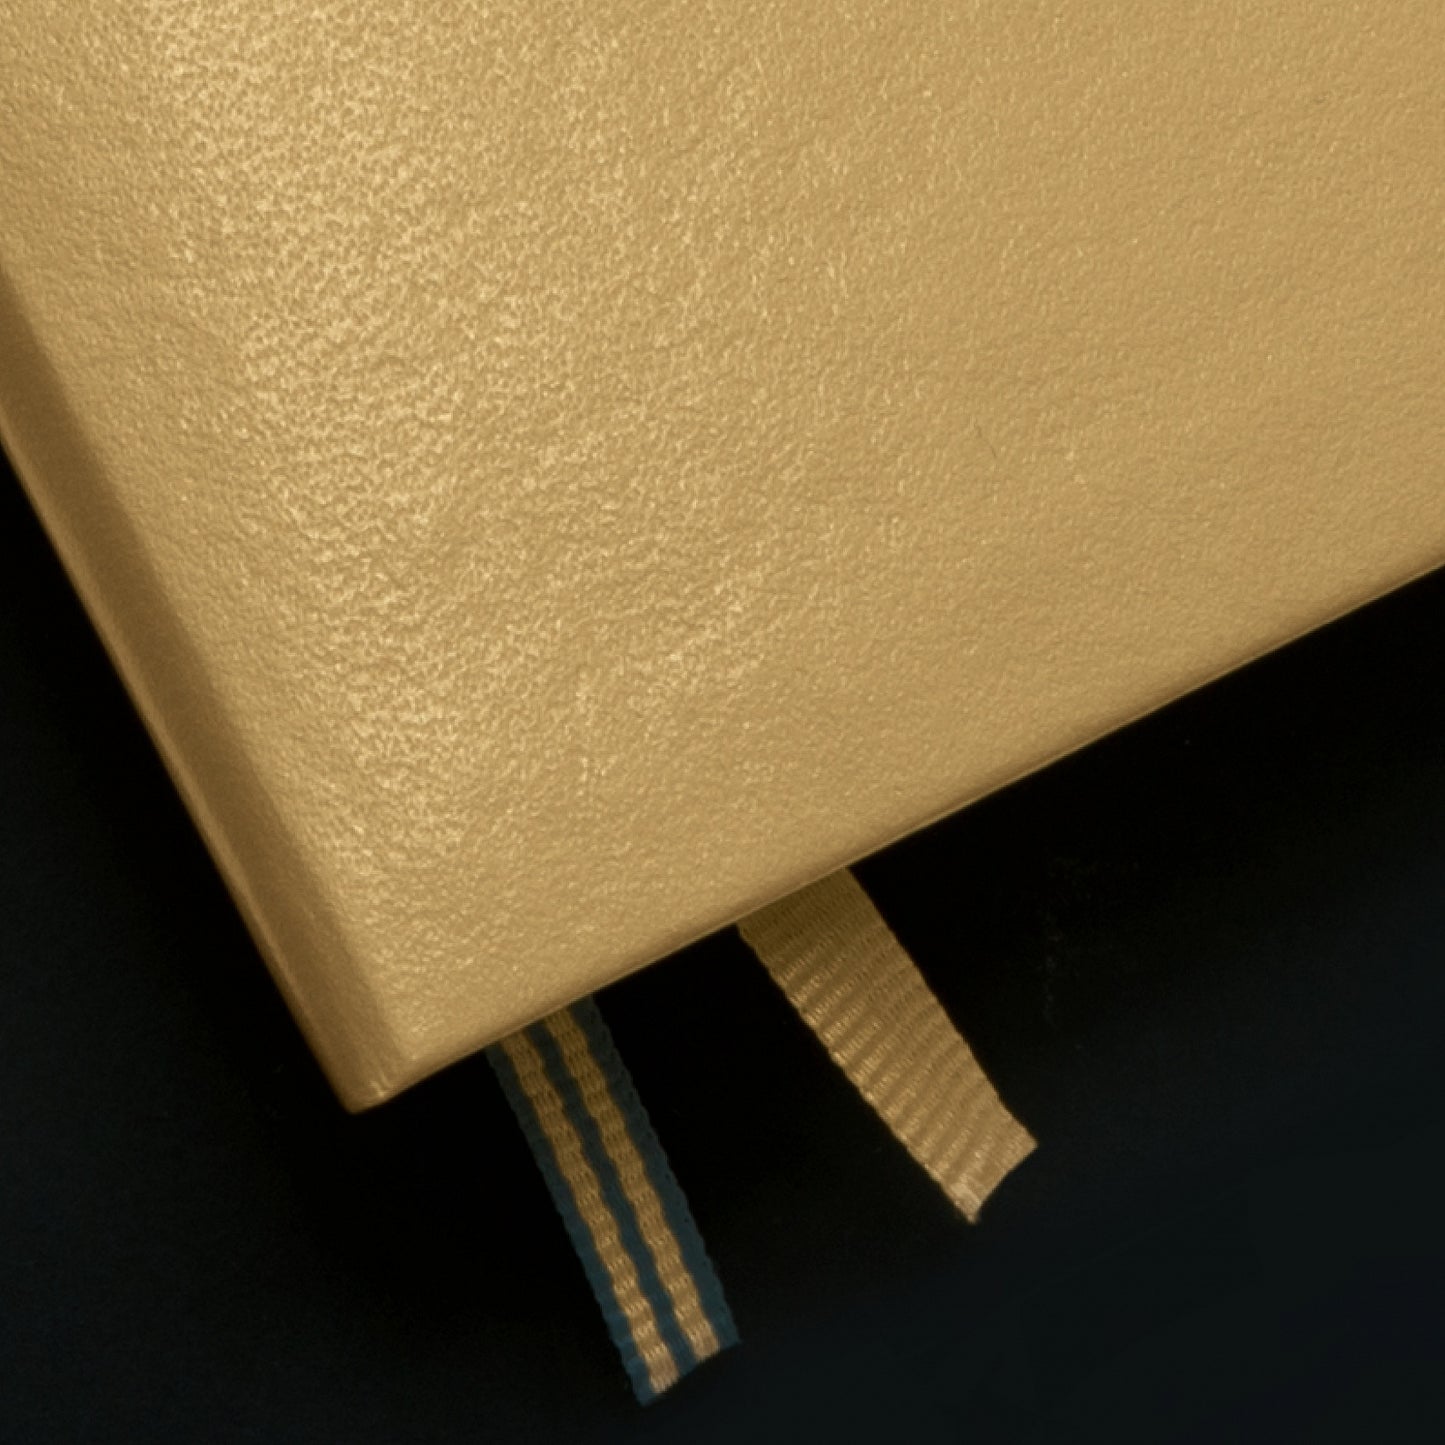 Leuchtturm1917 Metallic Edition A6 Pocket Hardcover Notebook - Ruled / Copper